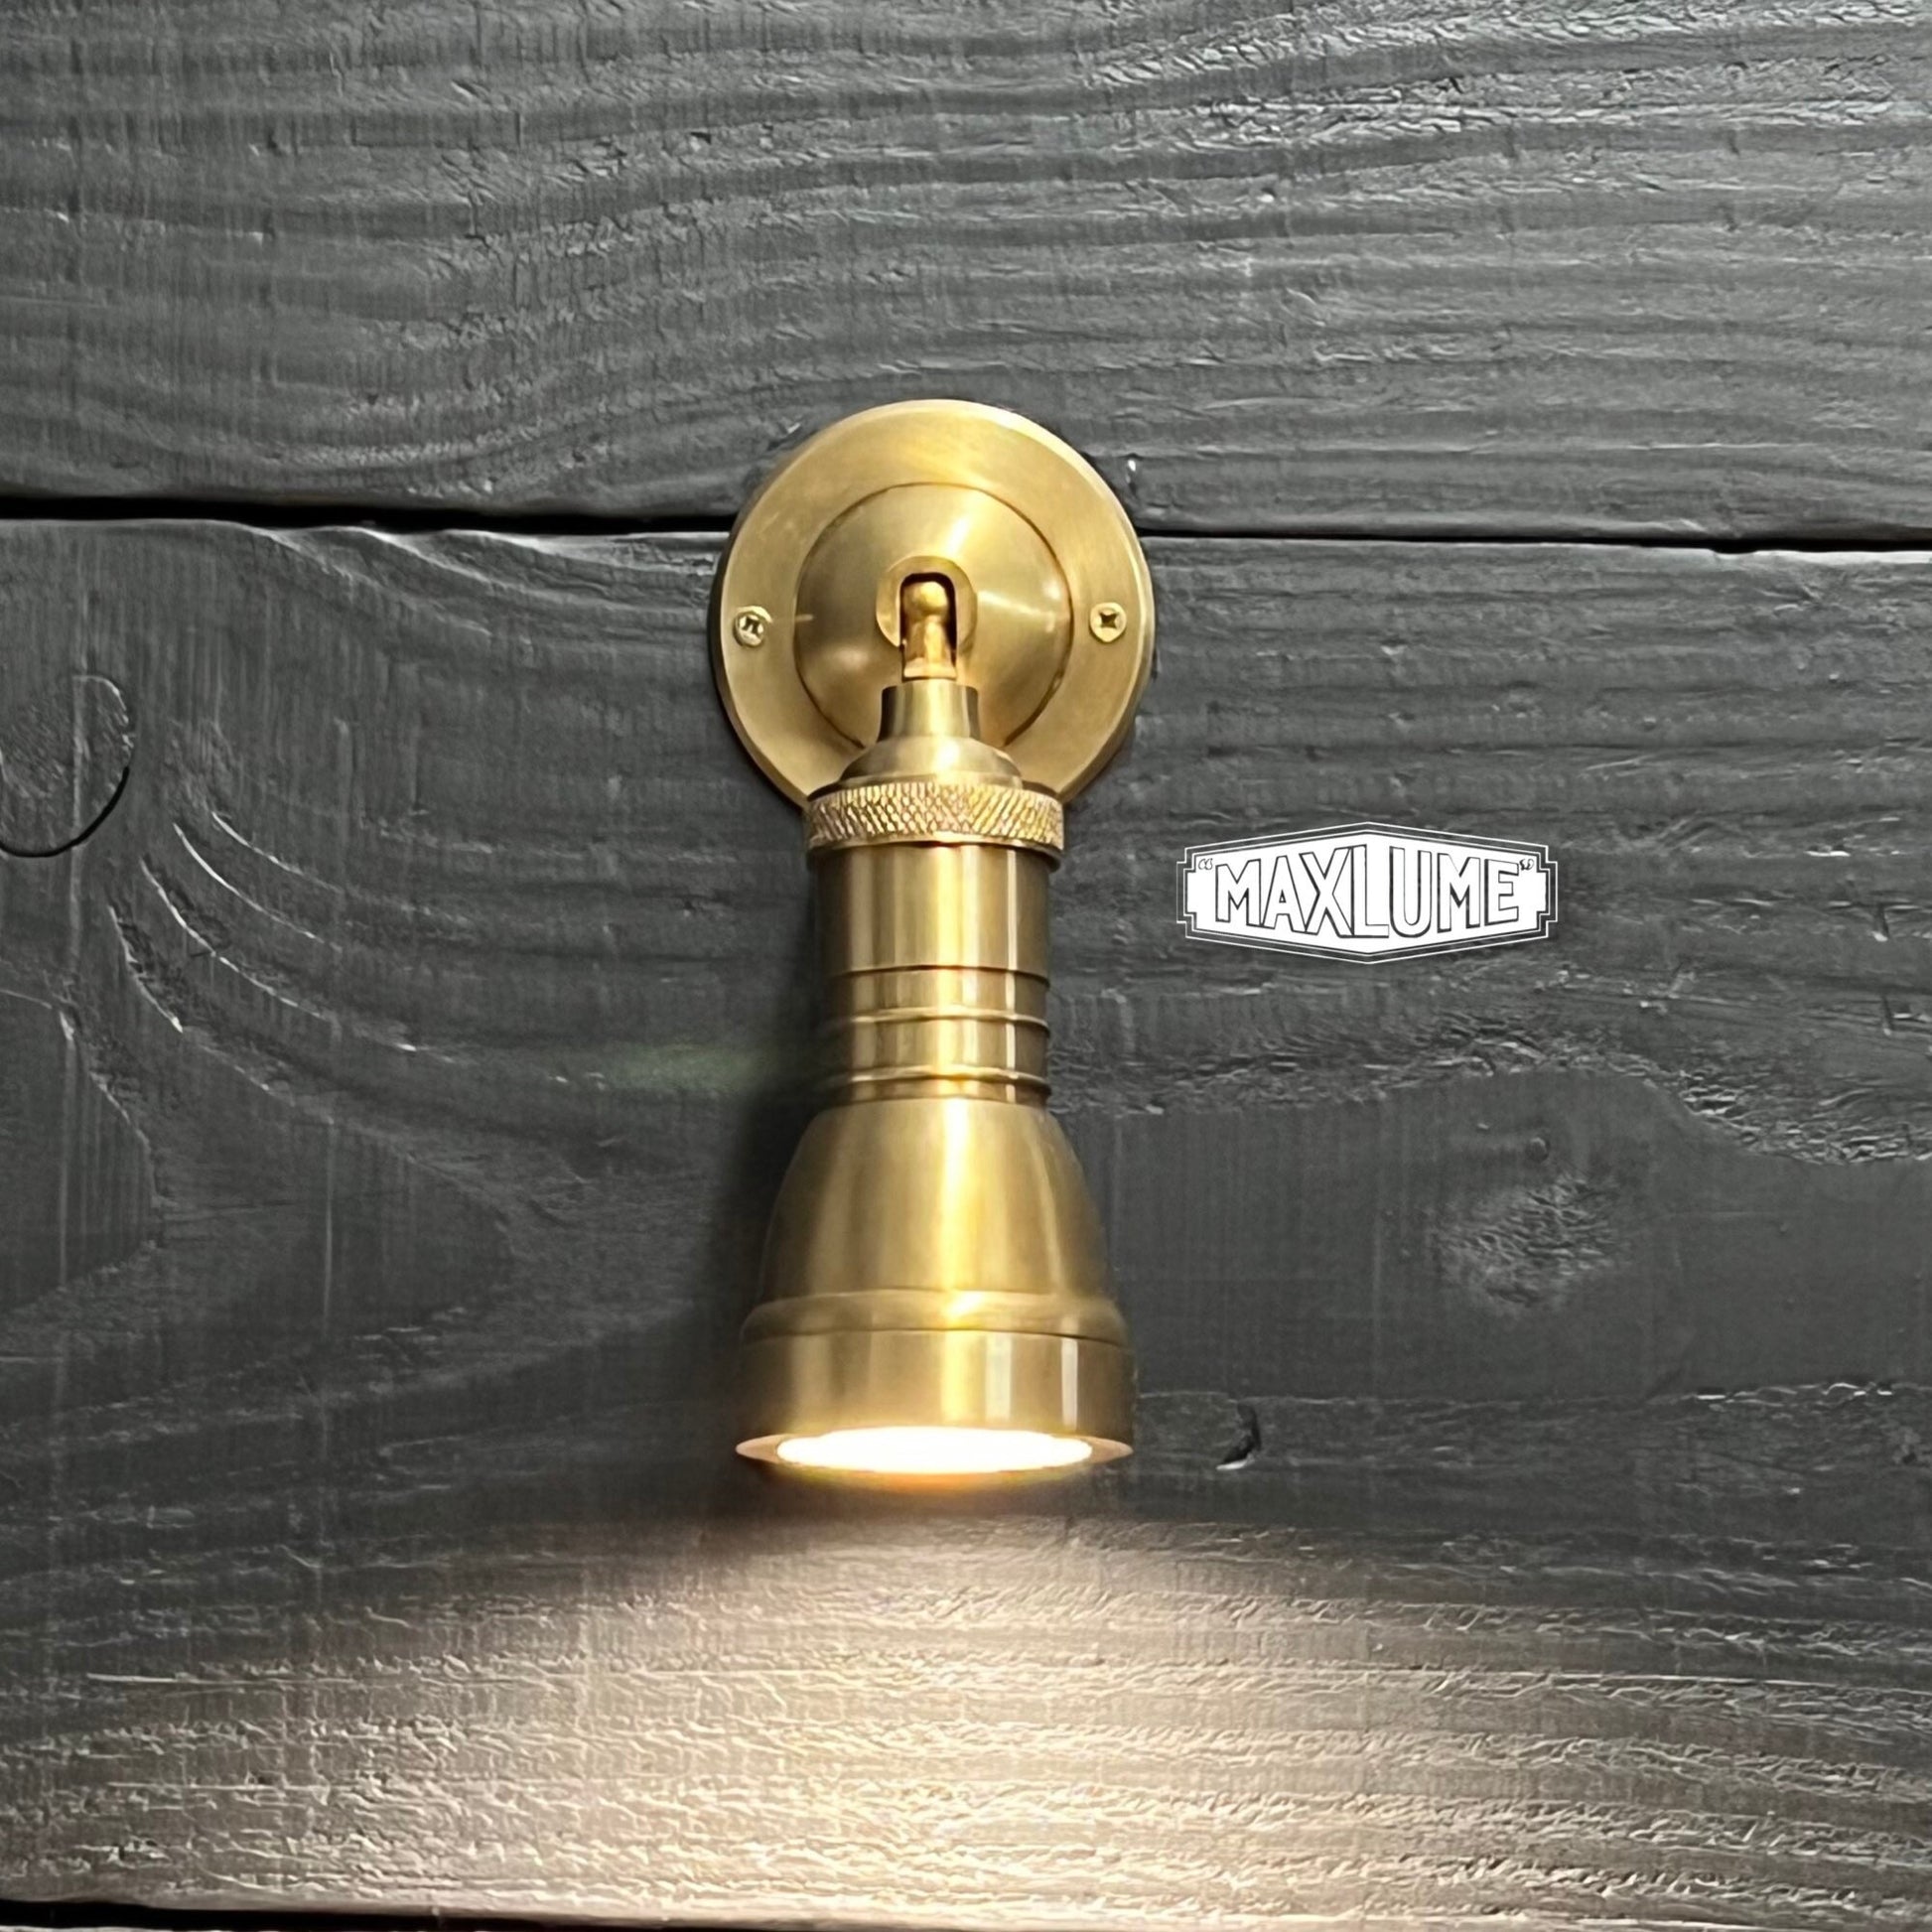 Solid Brass Short Adjustable Arm Industrial Wall Light | Spot light | Commercial | Bedroom Reading Table | Kitchen Table | Vintage